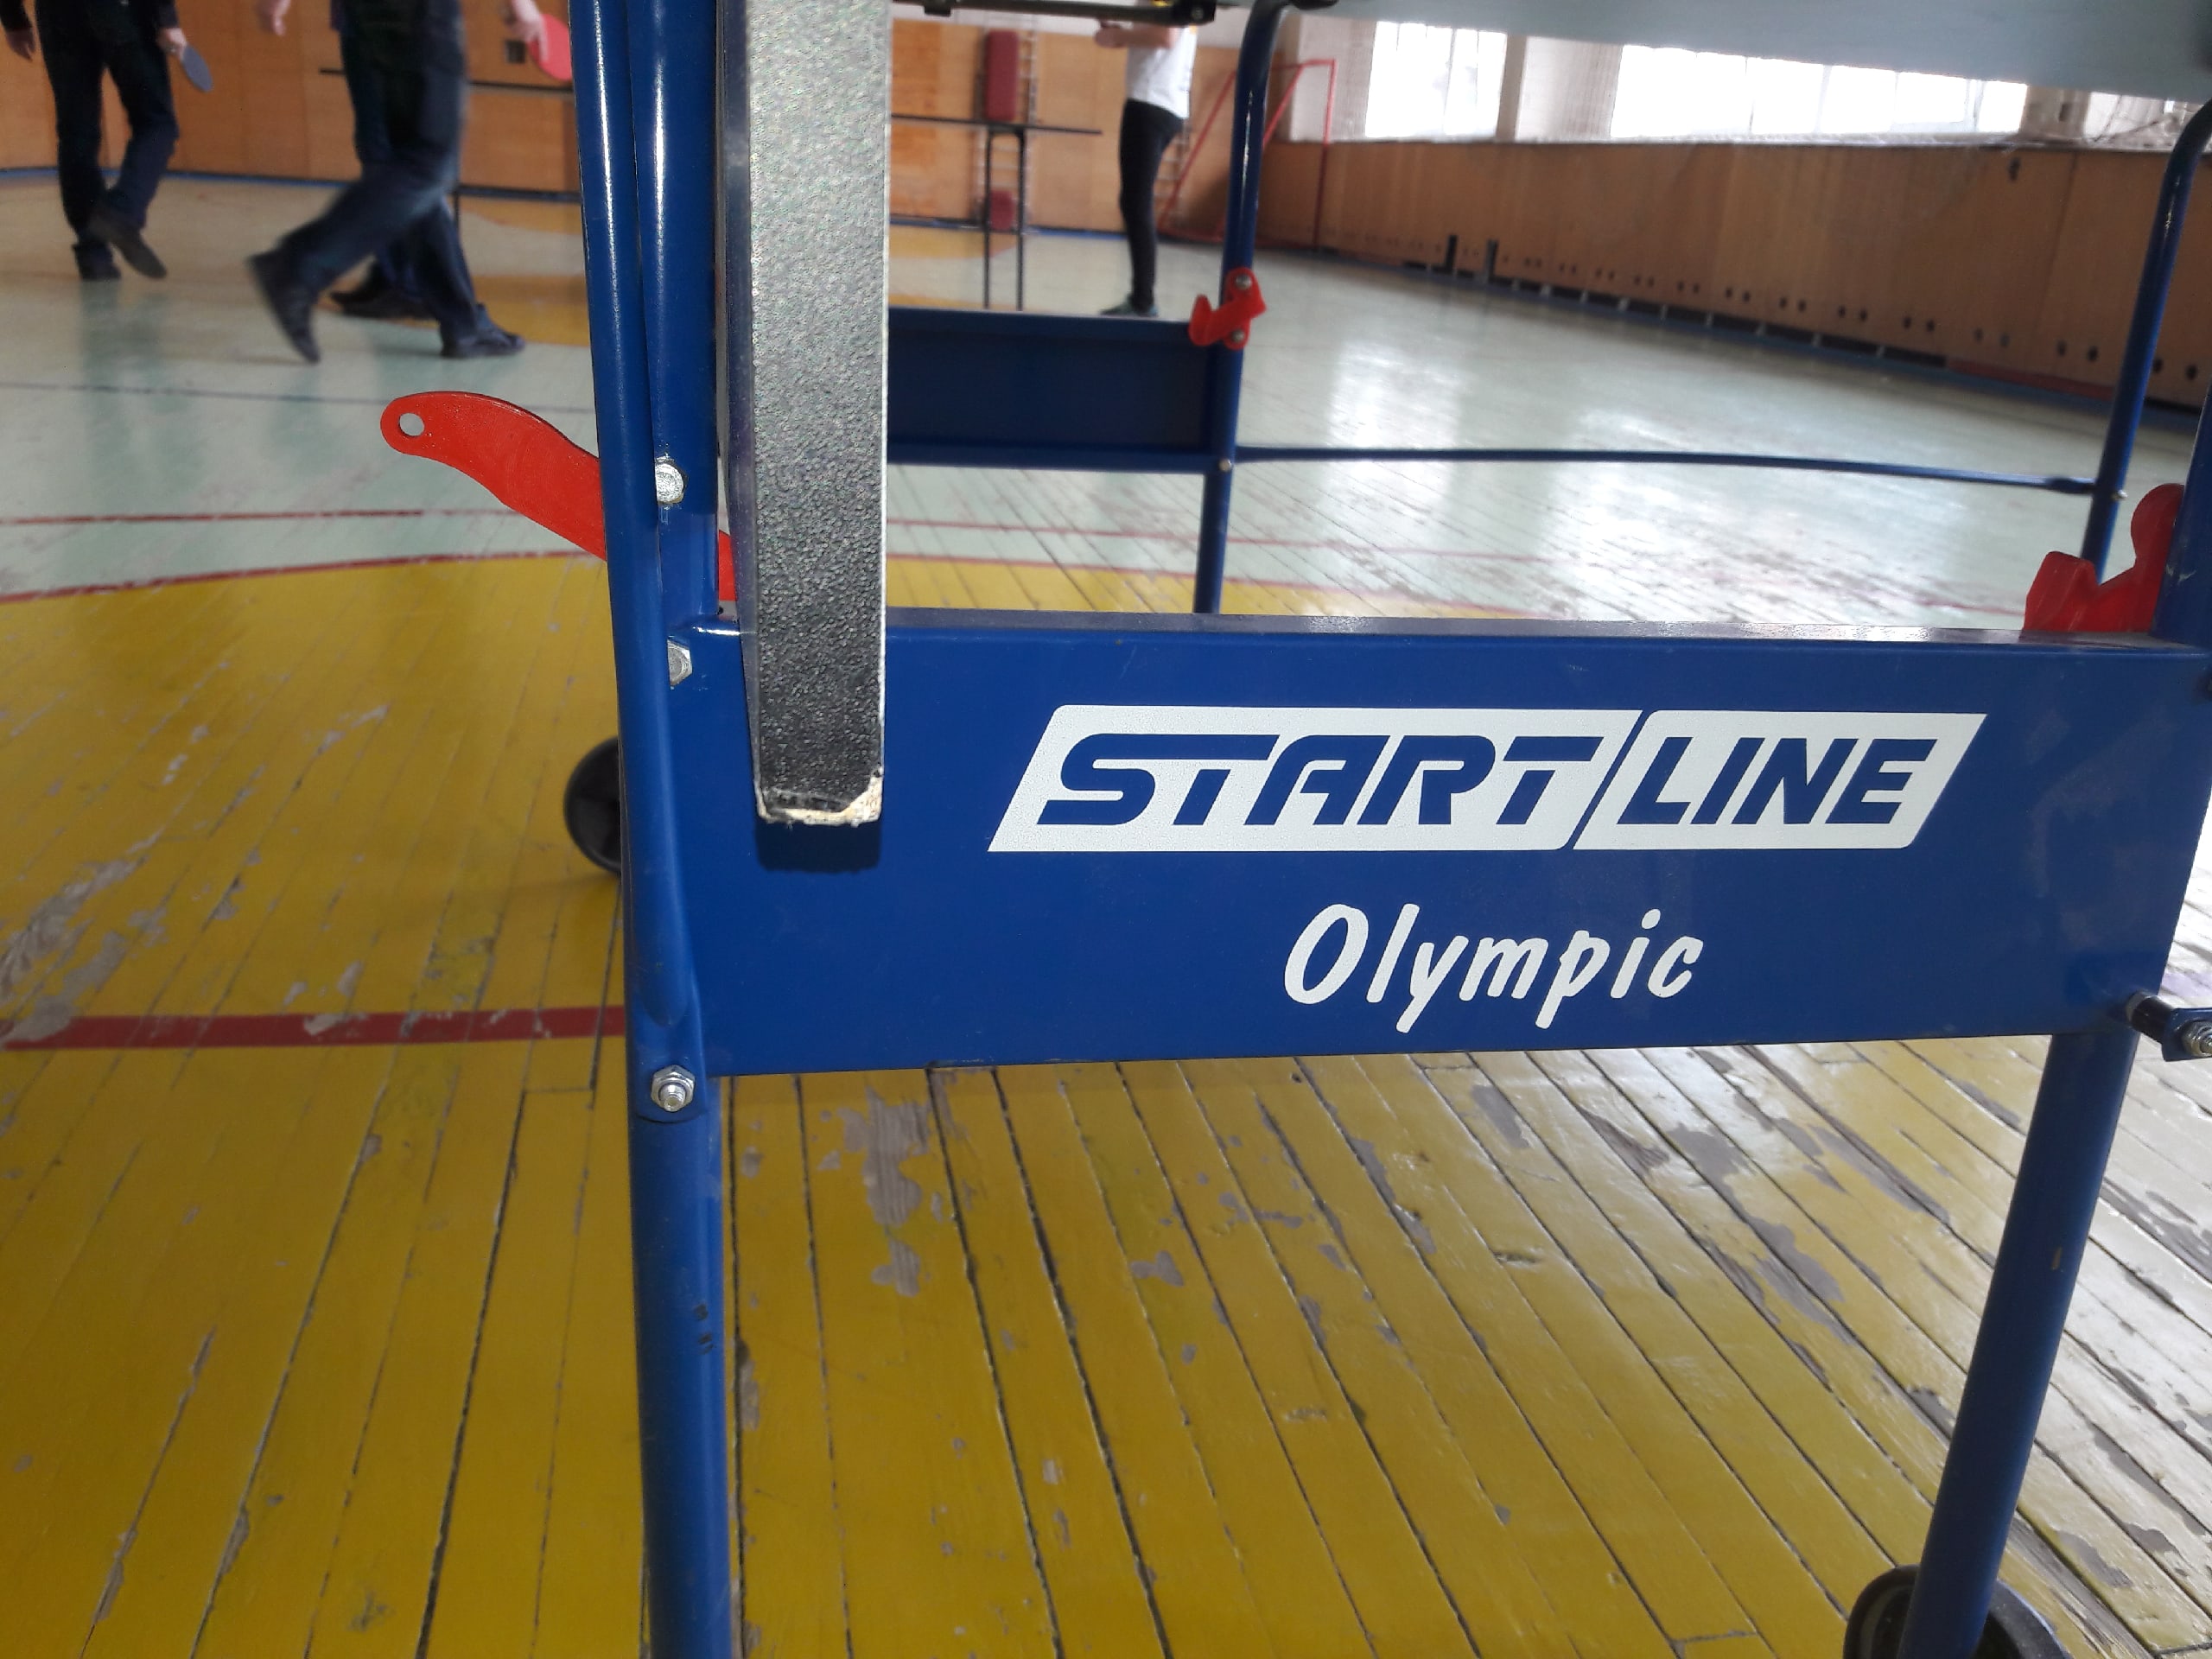 Olympic lines. Теннисный стол старт лайн Олимпик. Теннисный стол start line Olympic. Теннисный стол Star line Olimpic. STARLINE Olympic теннисный стол.